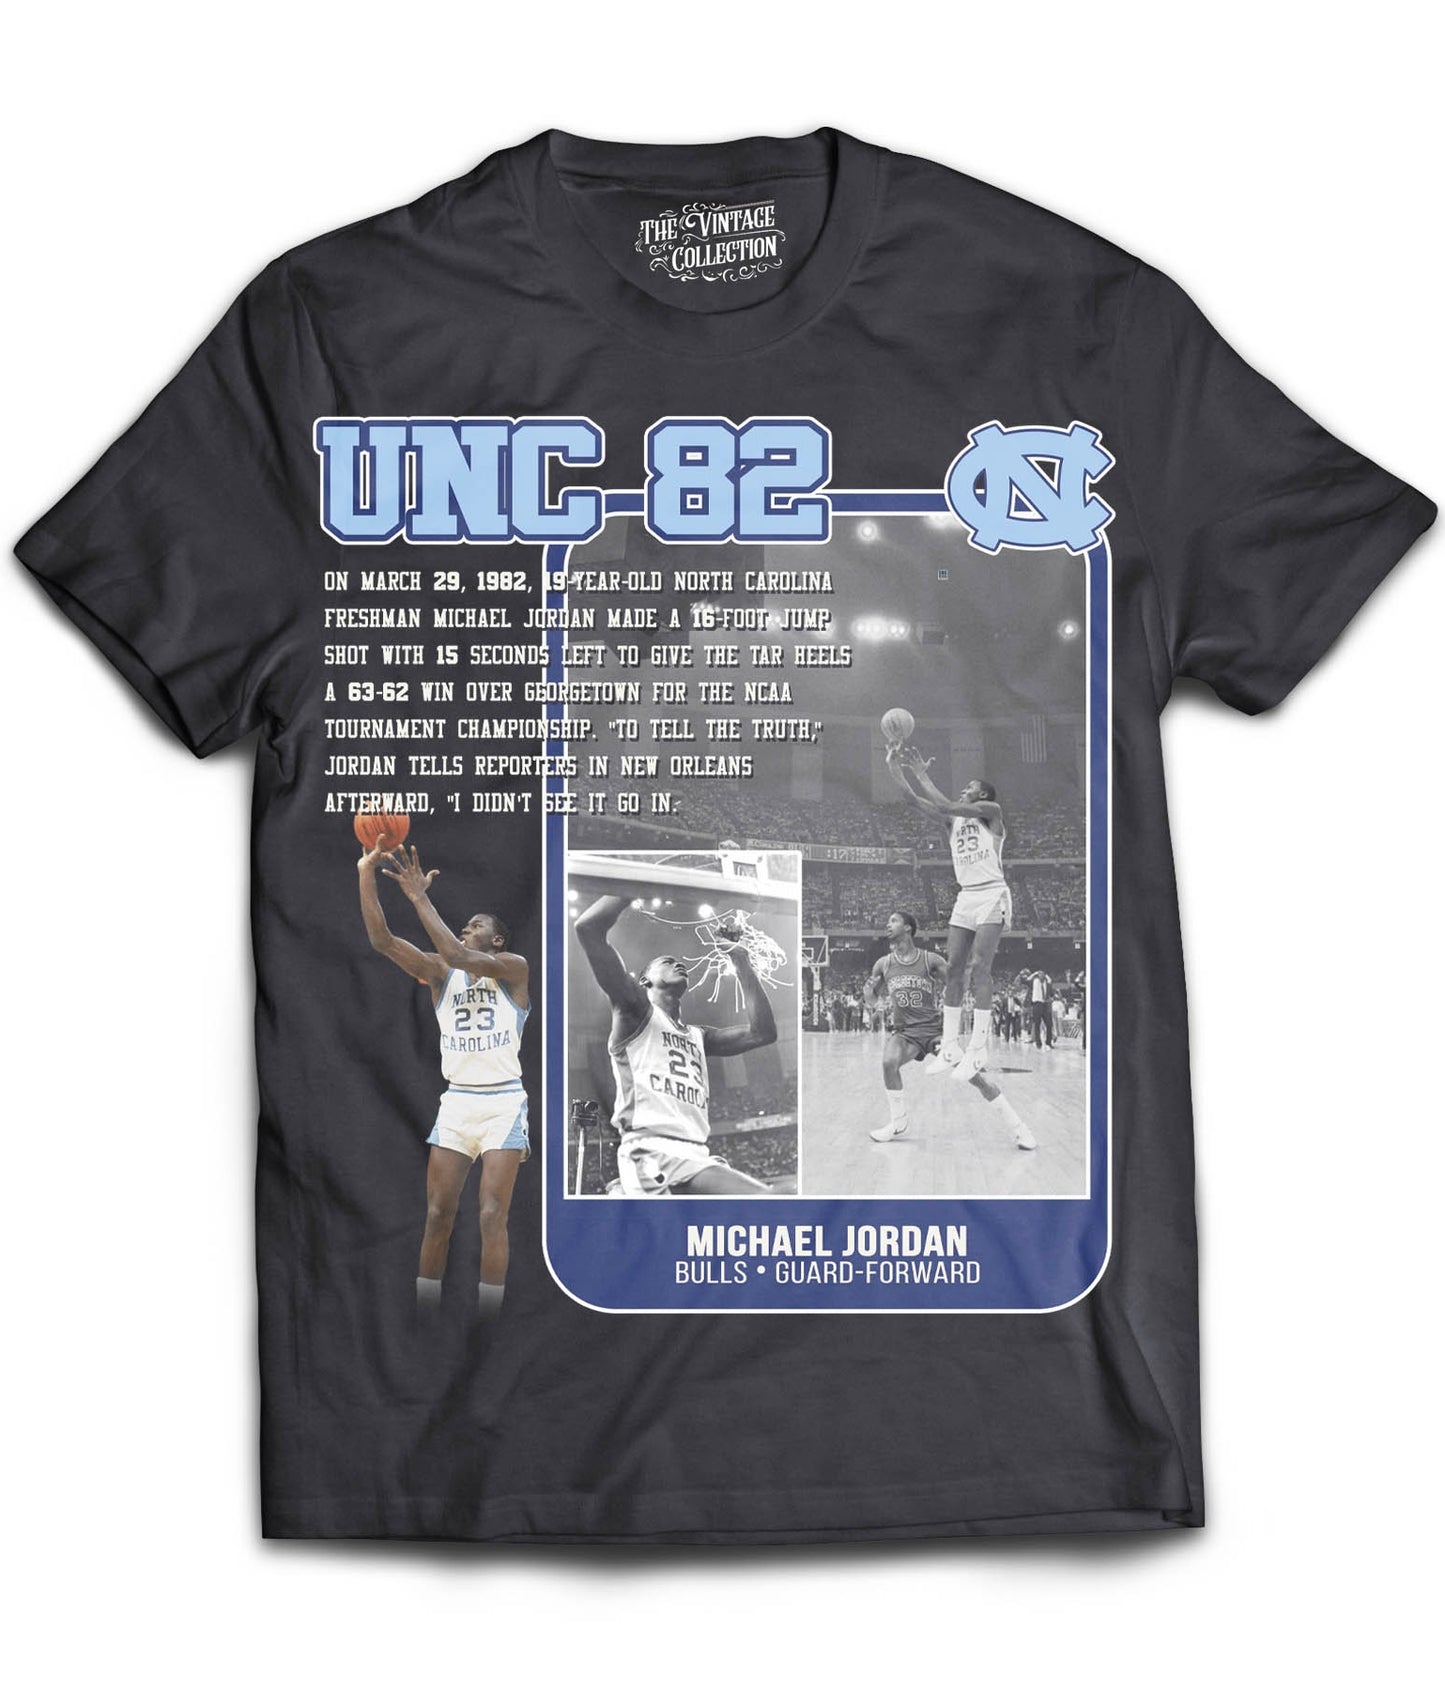 UNC 82 GOAT Tribute T-Shirt